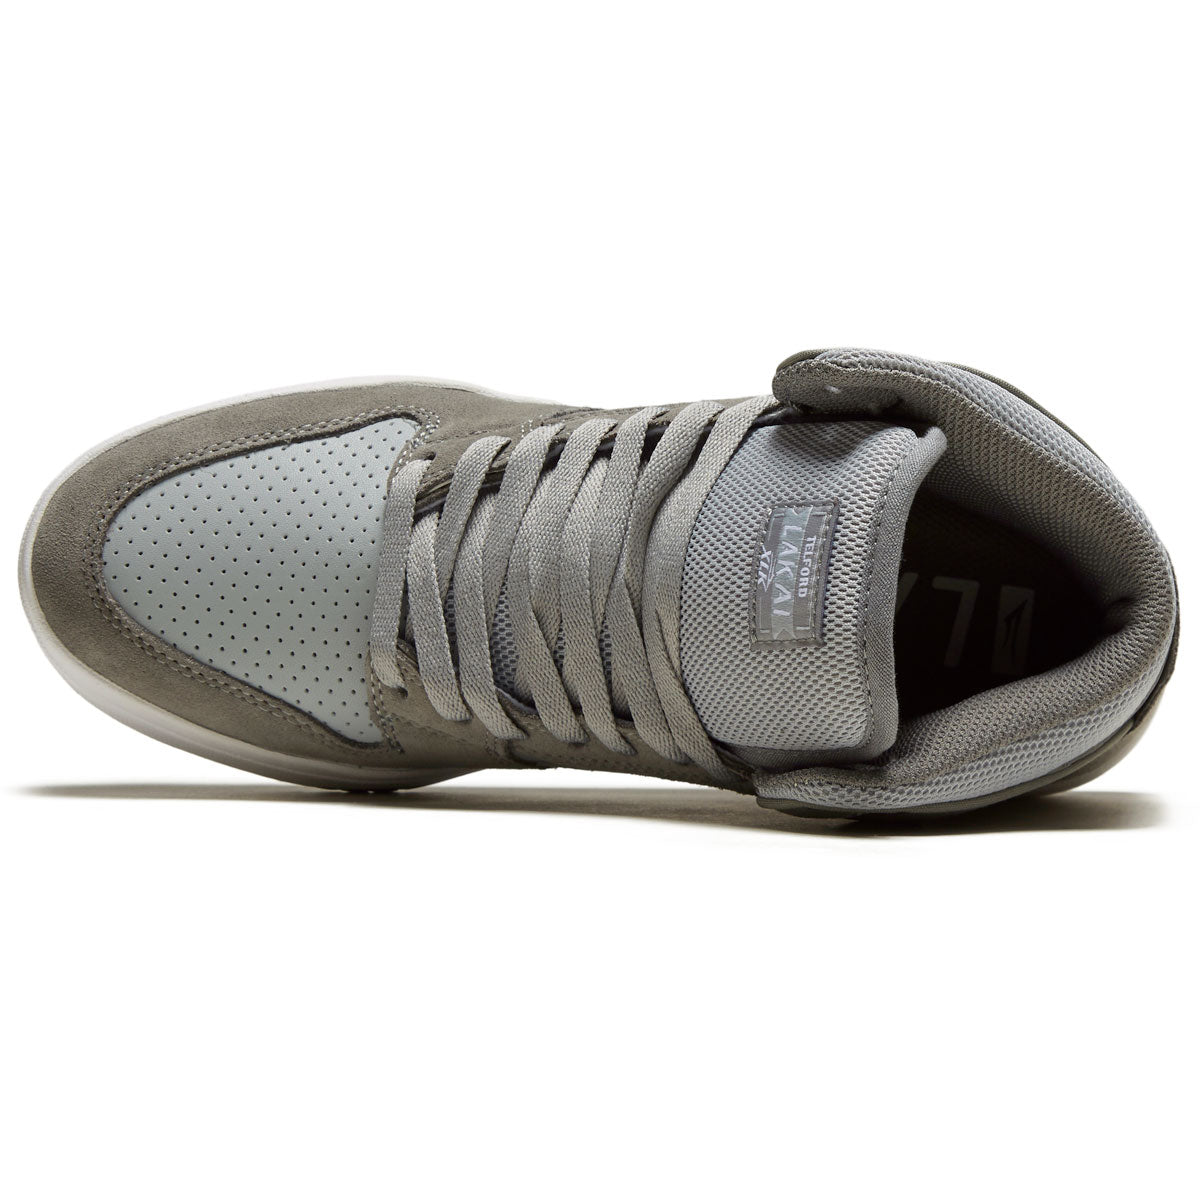 Lakai Telford Shoes - Grey/Light Grey Suede image 3